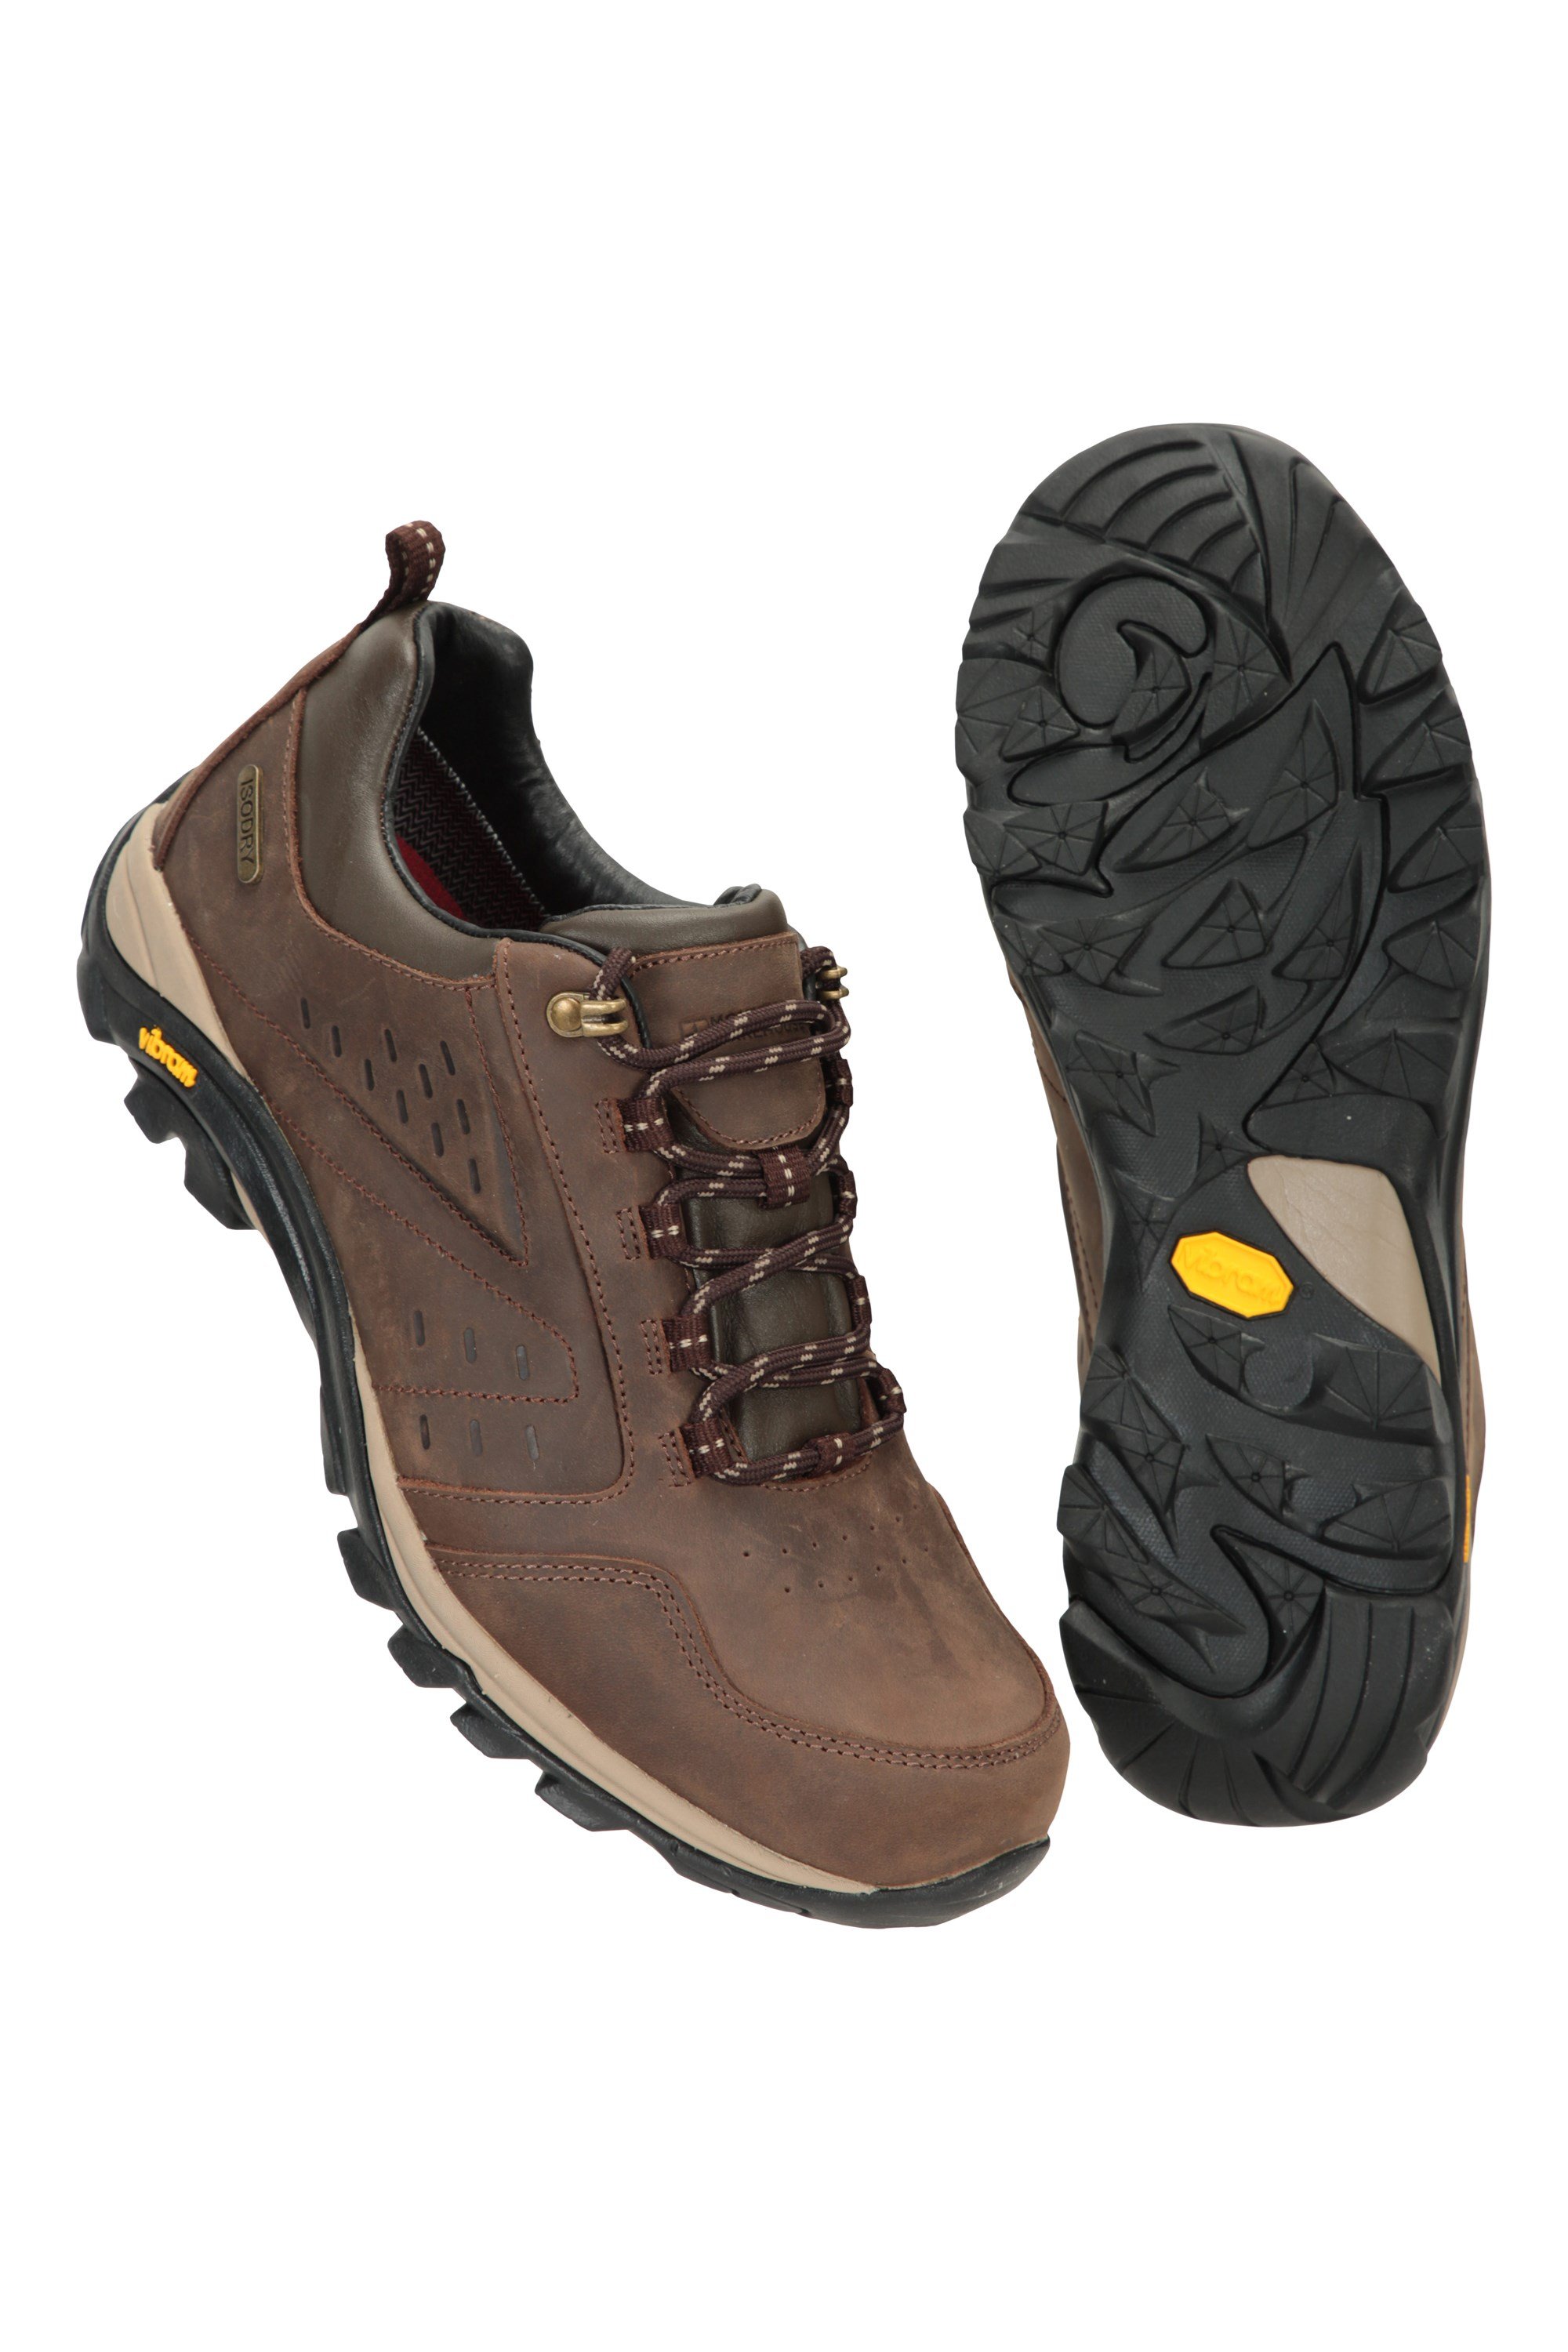 Vibram All Season Walking Shoes Mountain Warehouse Field Mens Boots 